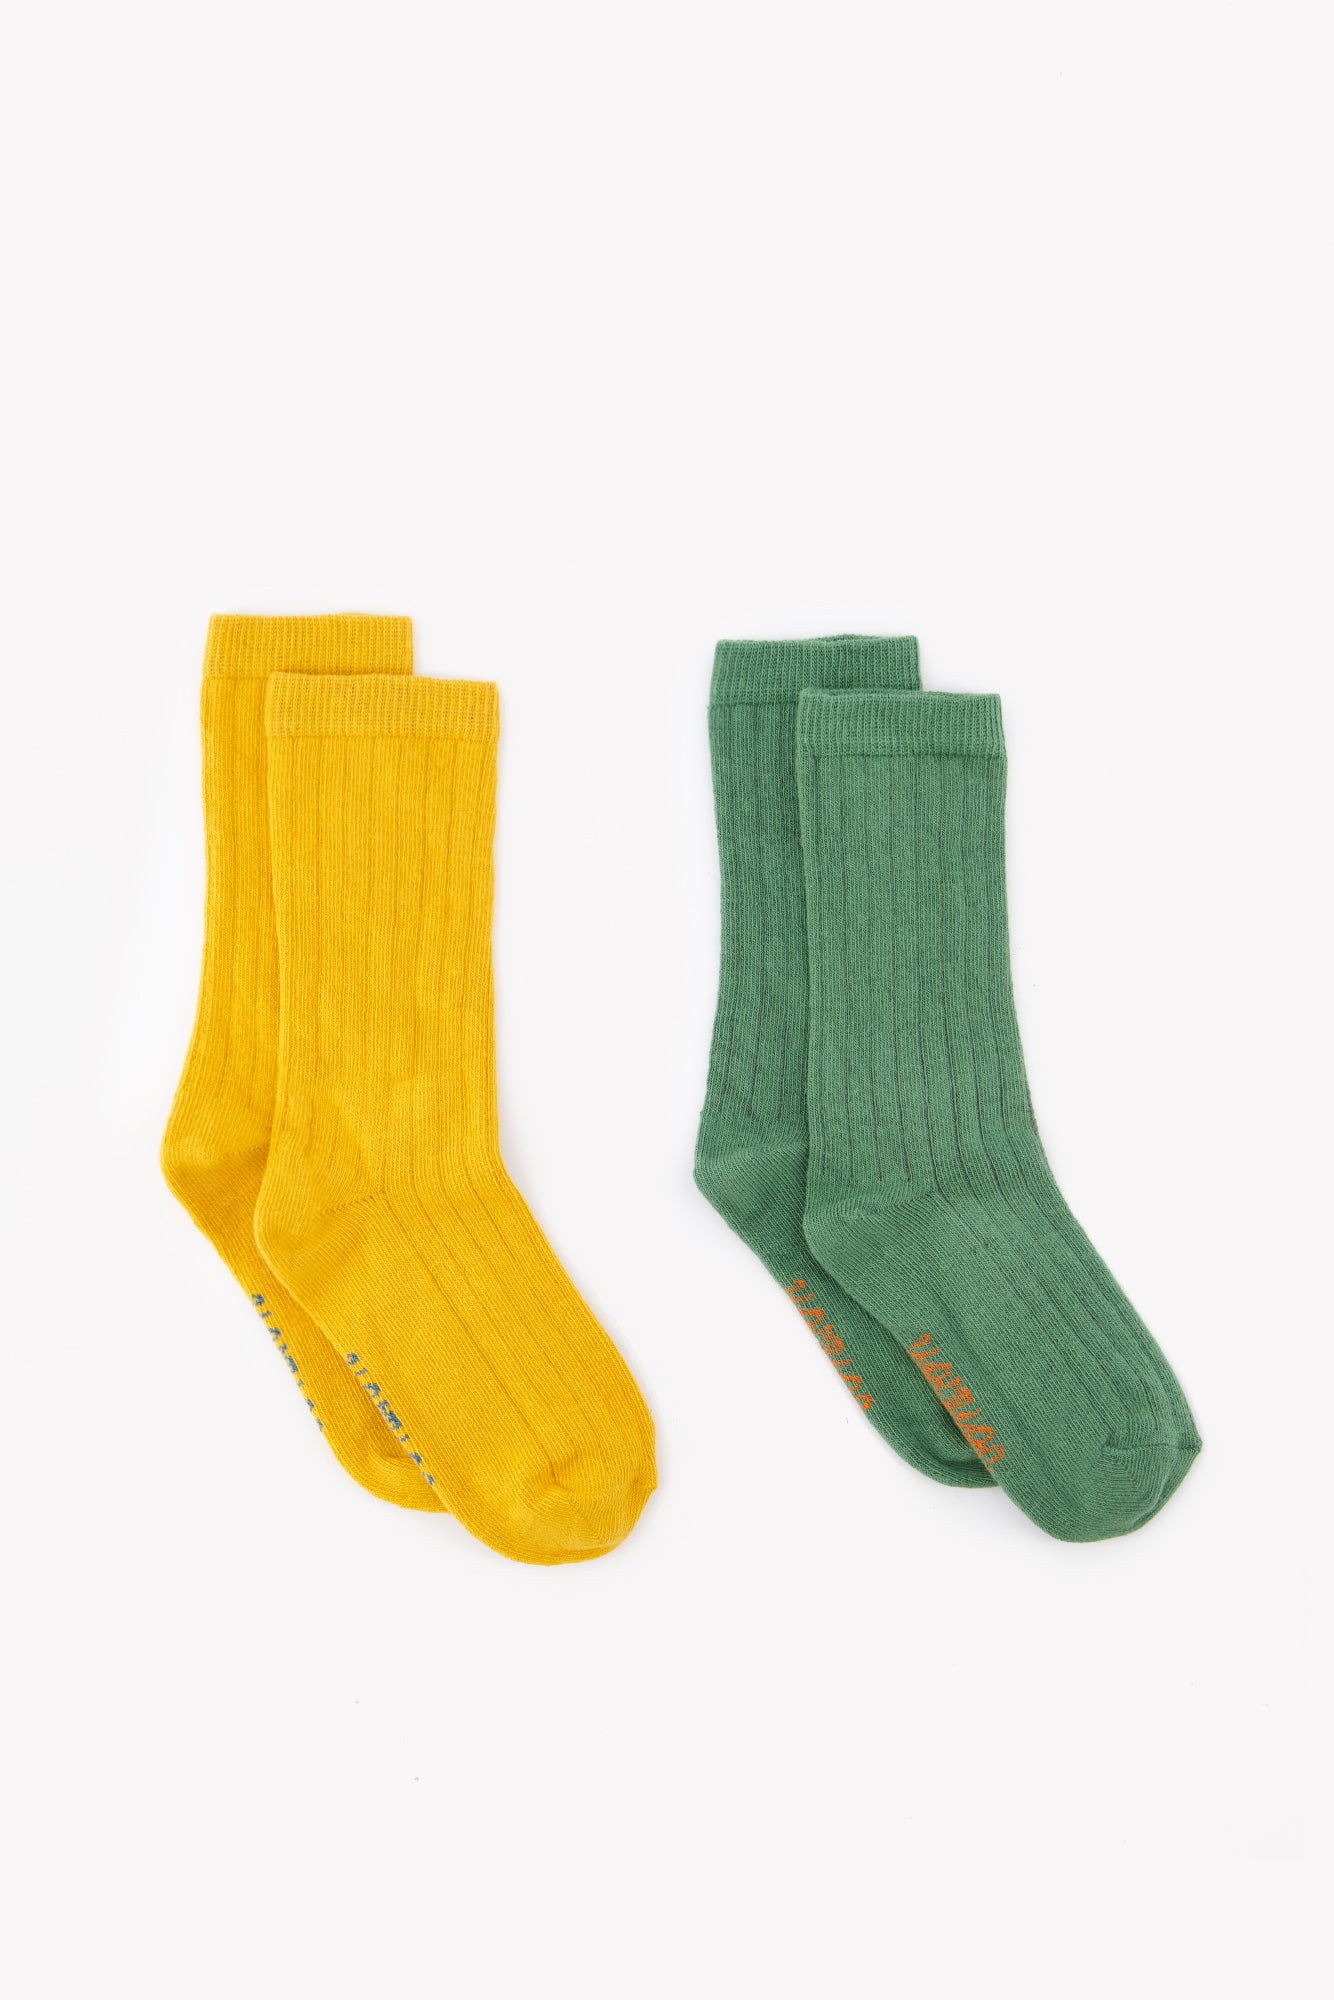 Chaussettes - Duo jaune vert